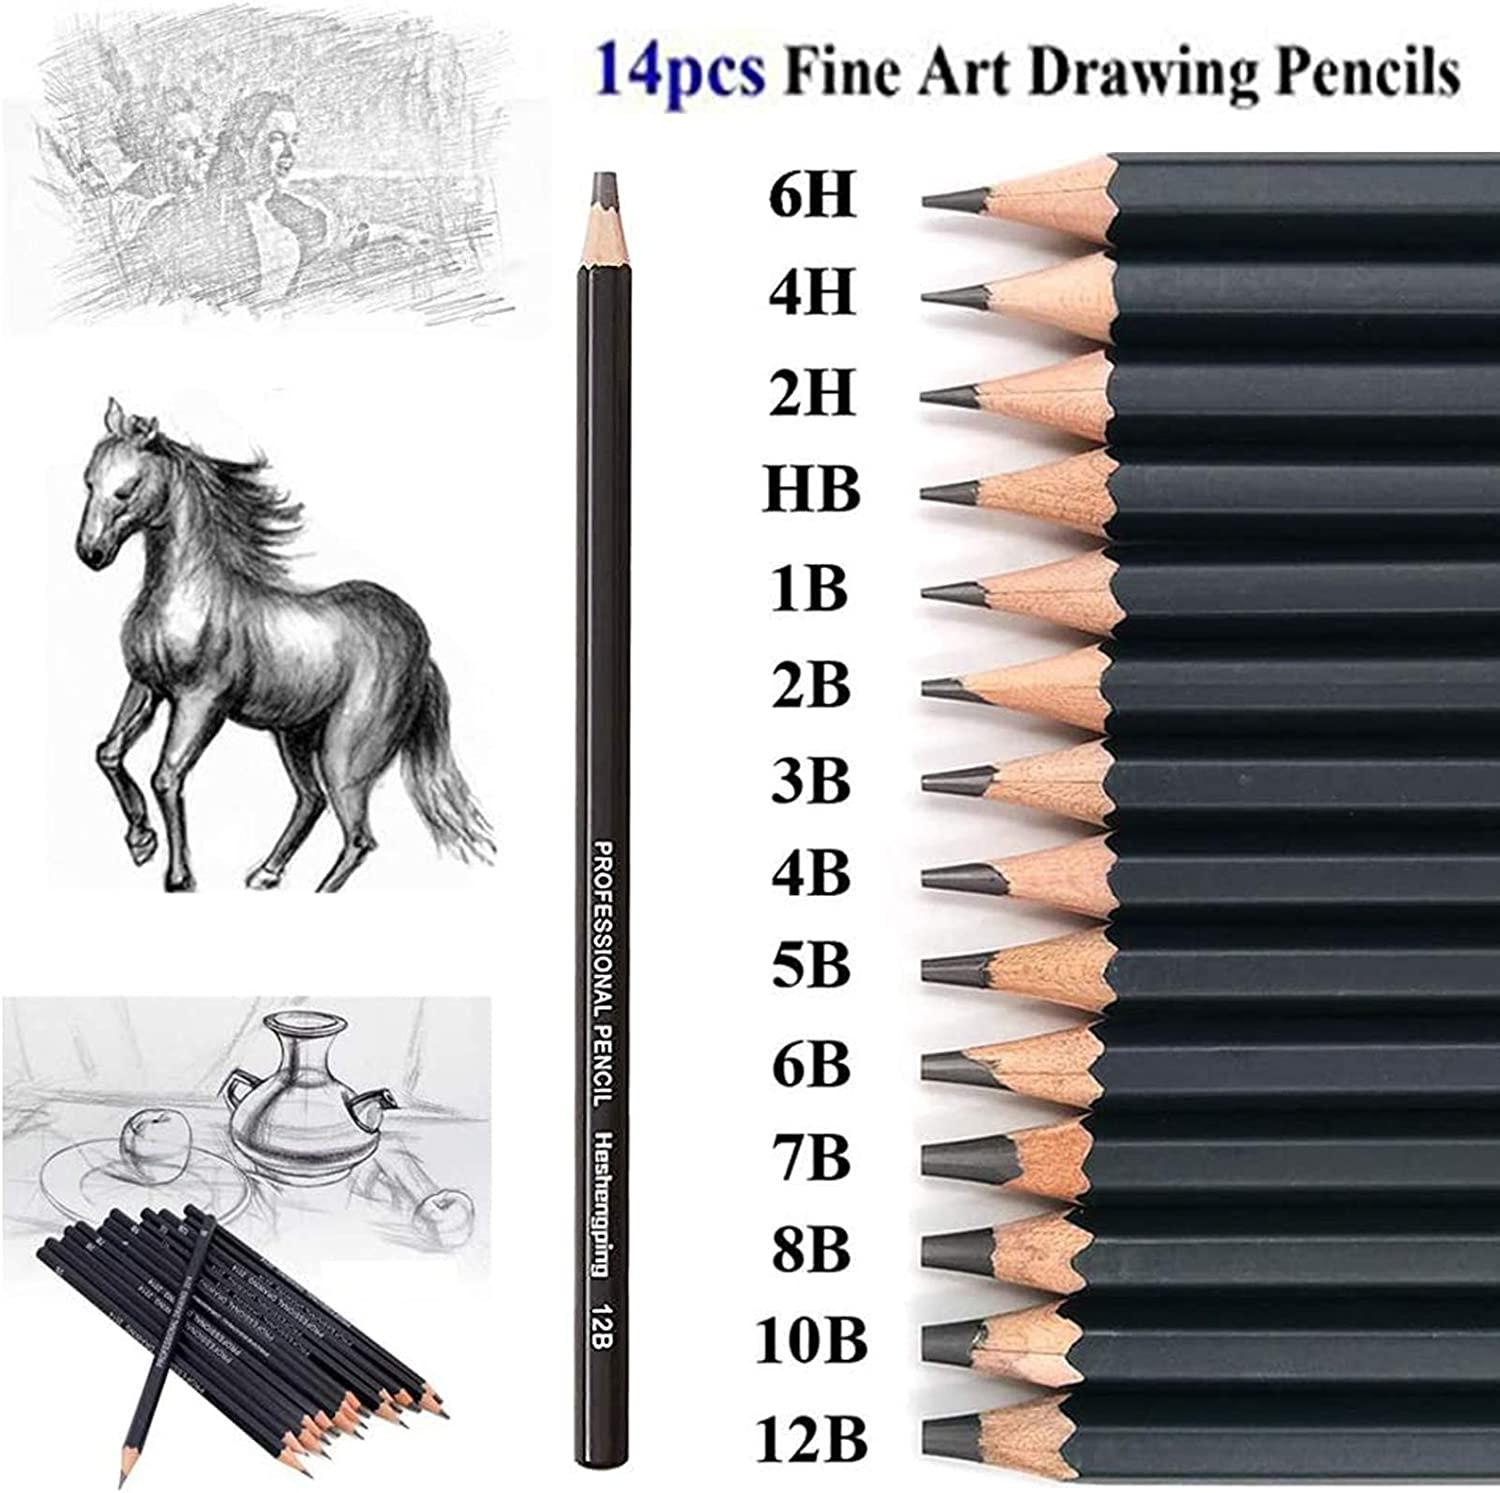  Heshengping Sketch & Drawing Art Pencil Kit-50 Piece